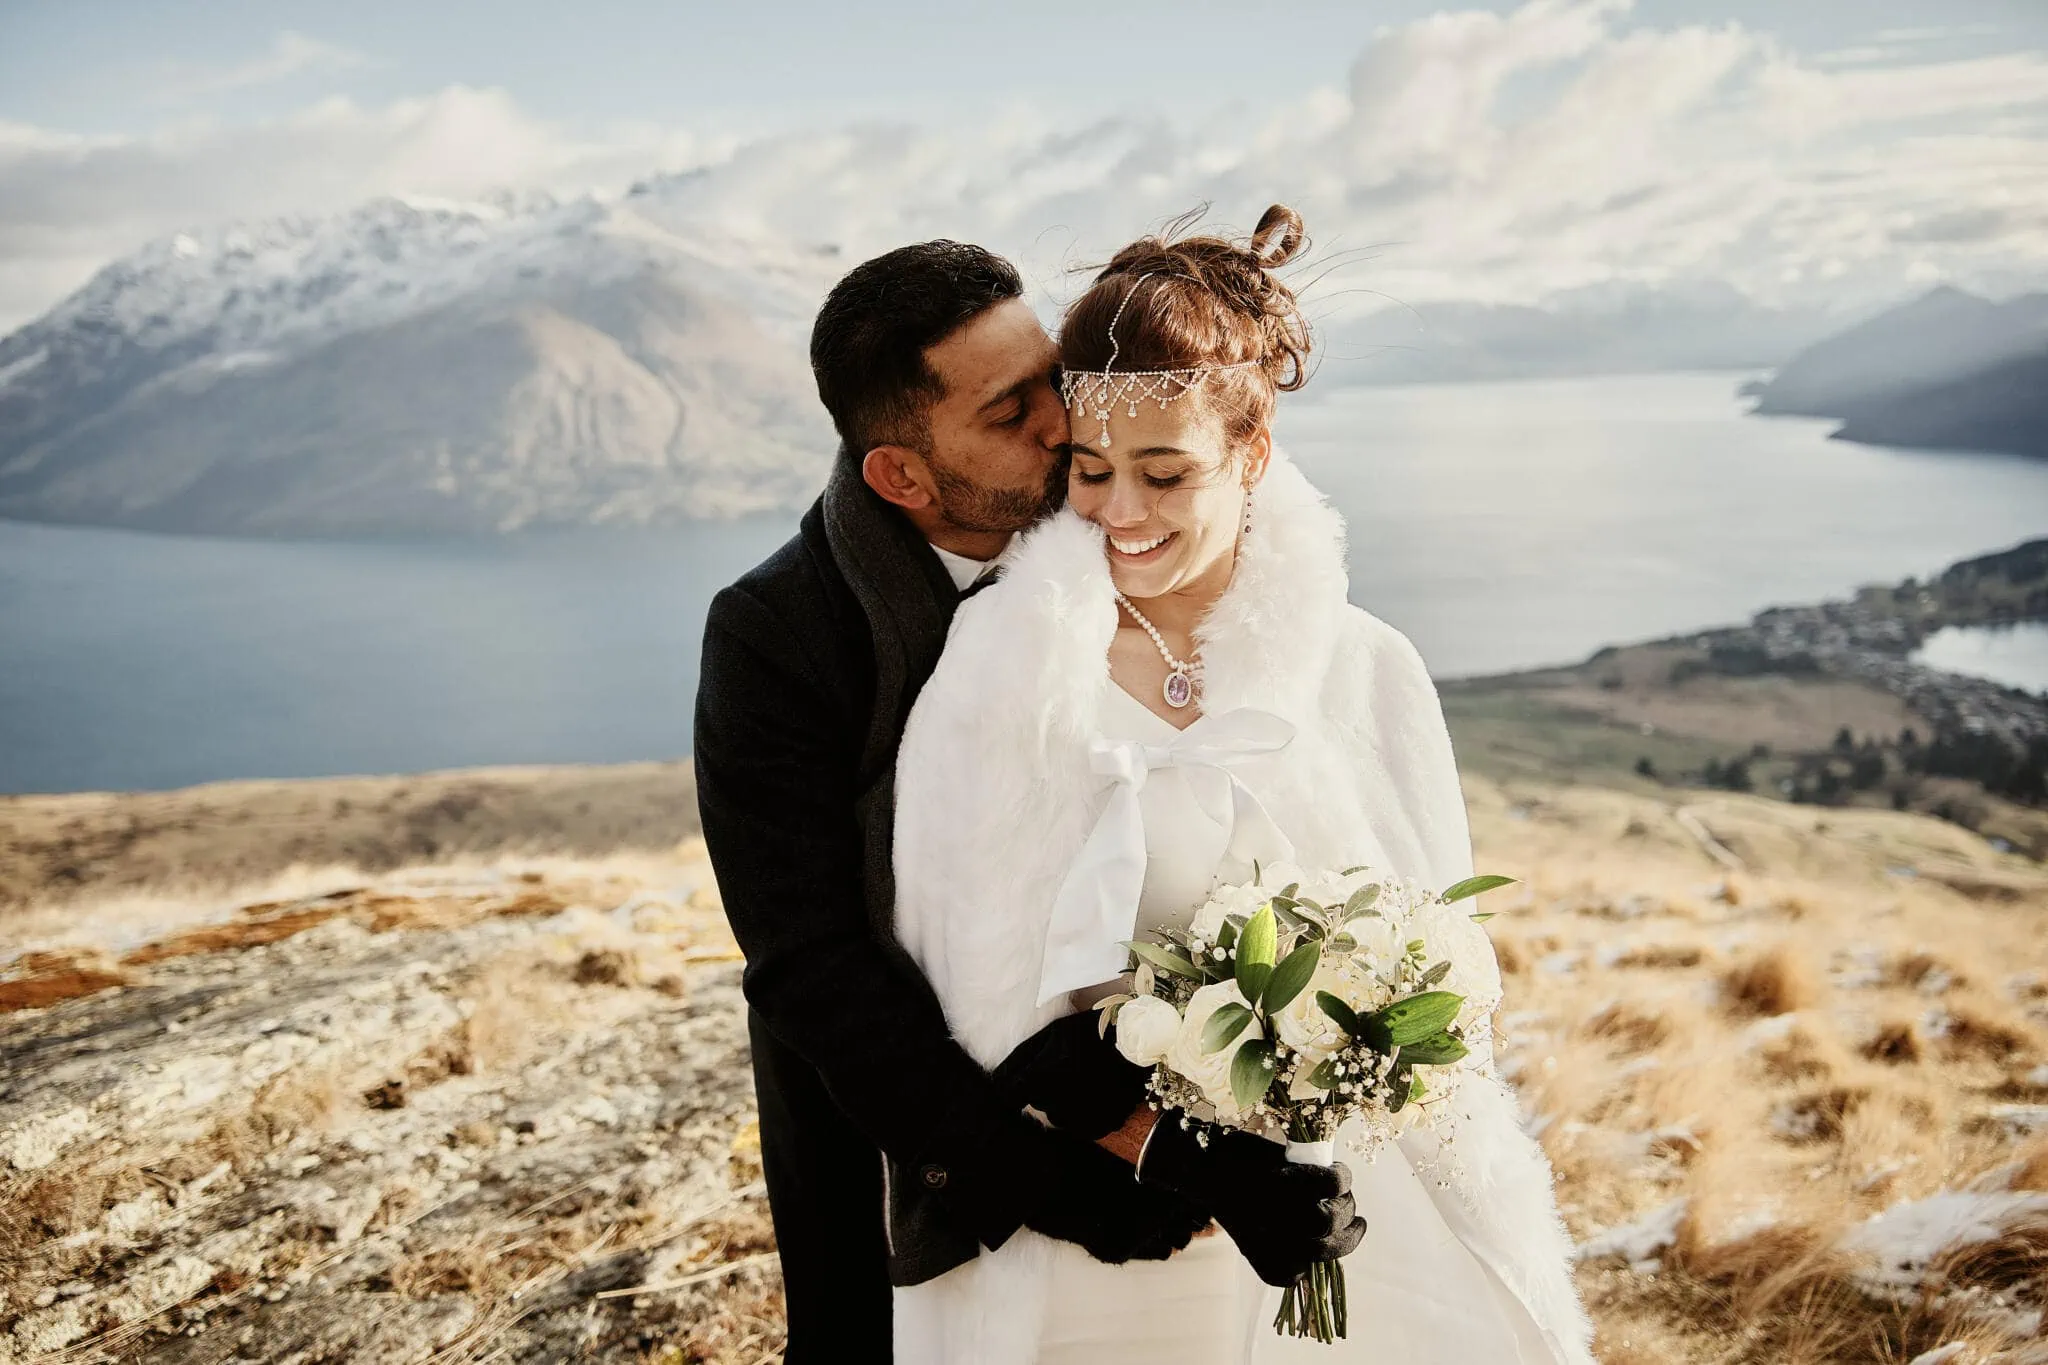 Queenstown New Zealand Elopement Wedding Photographer - A Muslim couple, Wasim and Yumn, sharing a kiss atop a mountain overlooking Lake Wanaka during their Queenstown Islamic wedding.